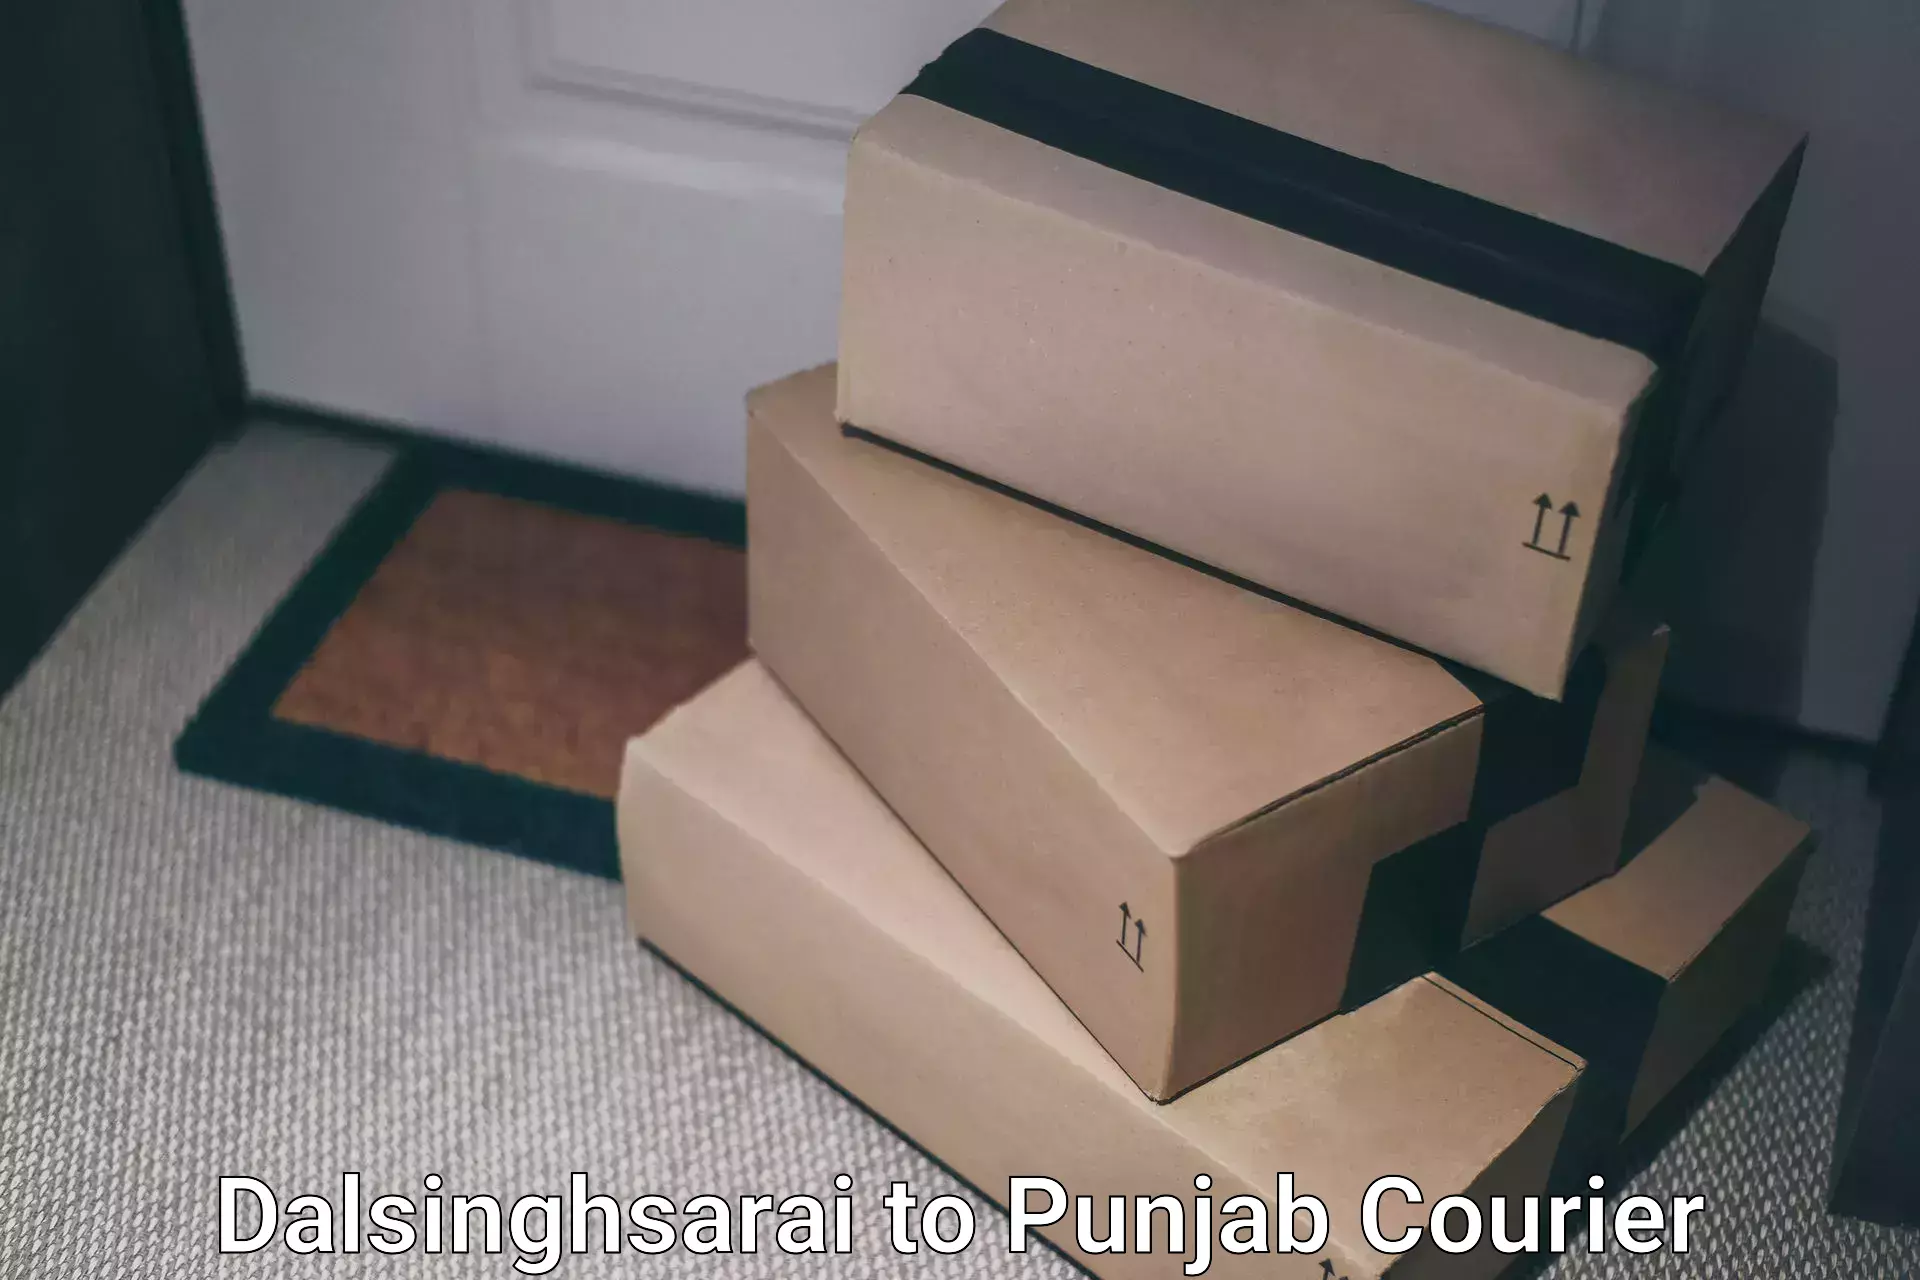 User-friendly courier app Dalsinghsarai to Zirakpur